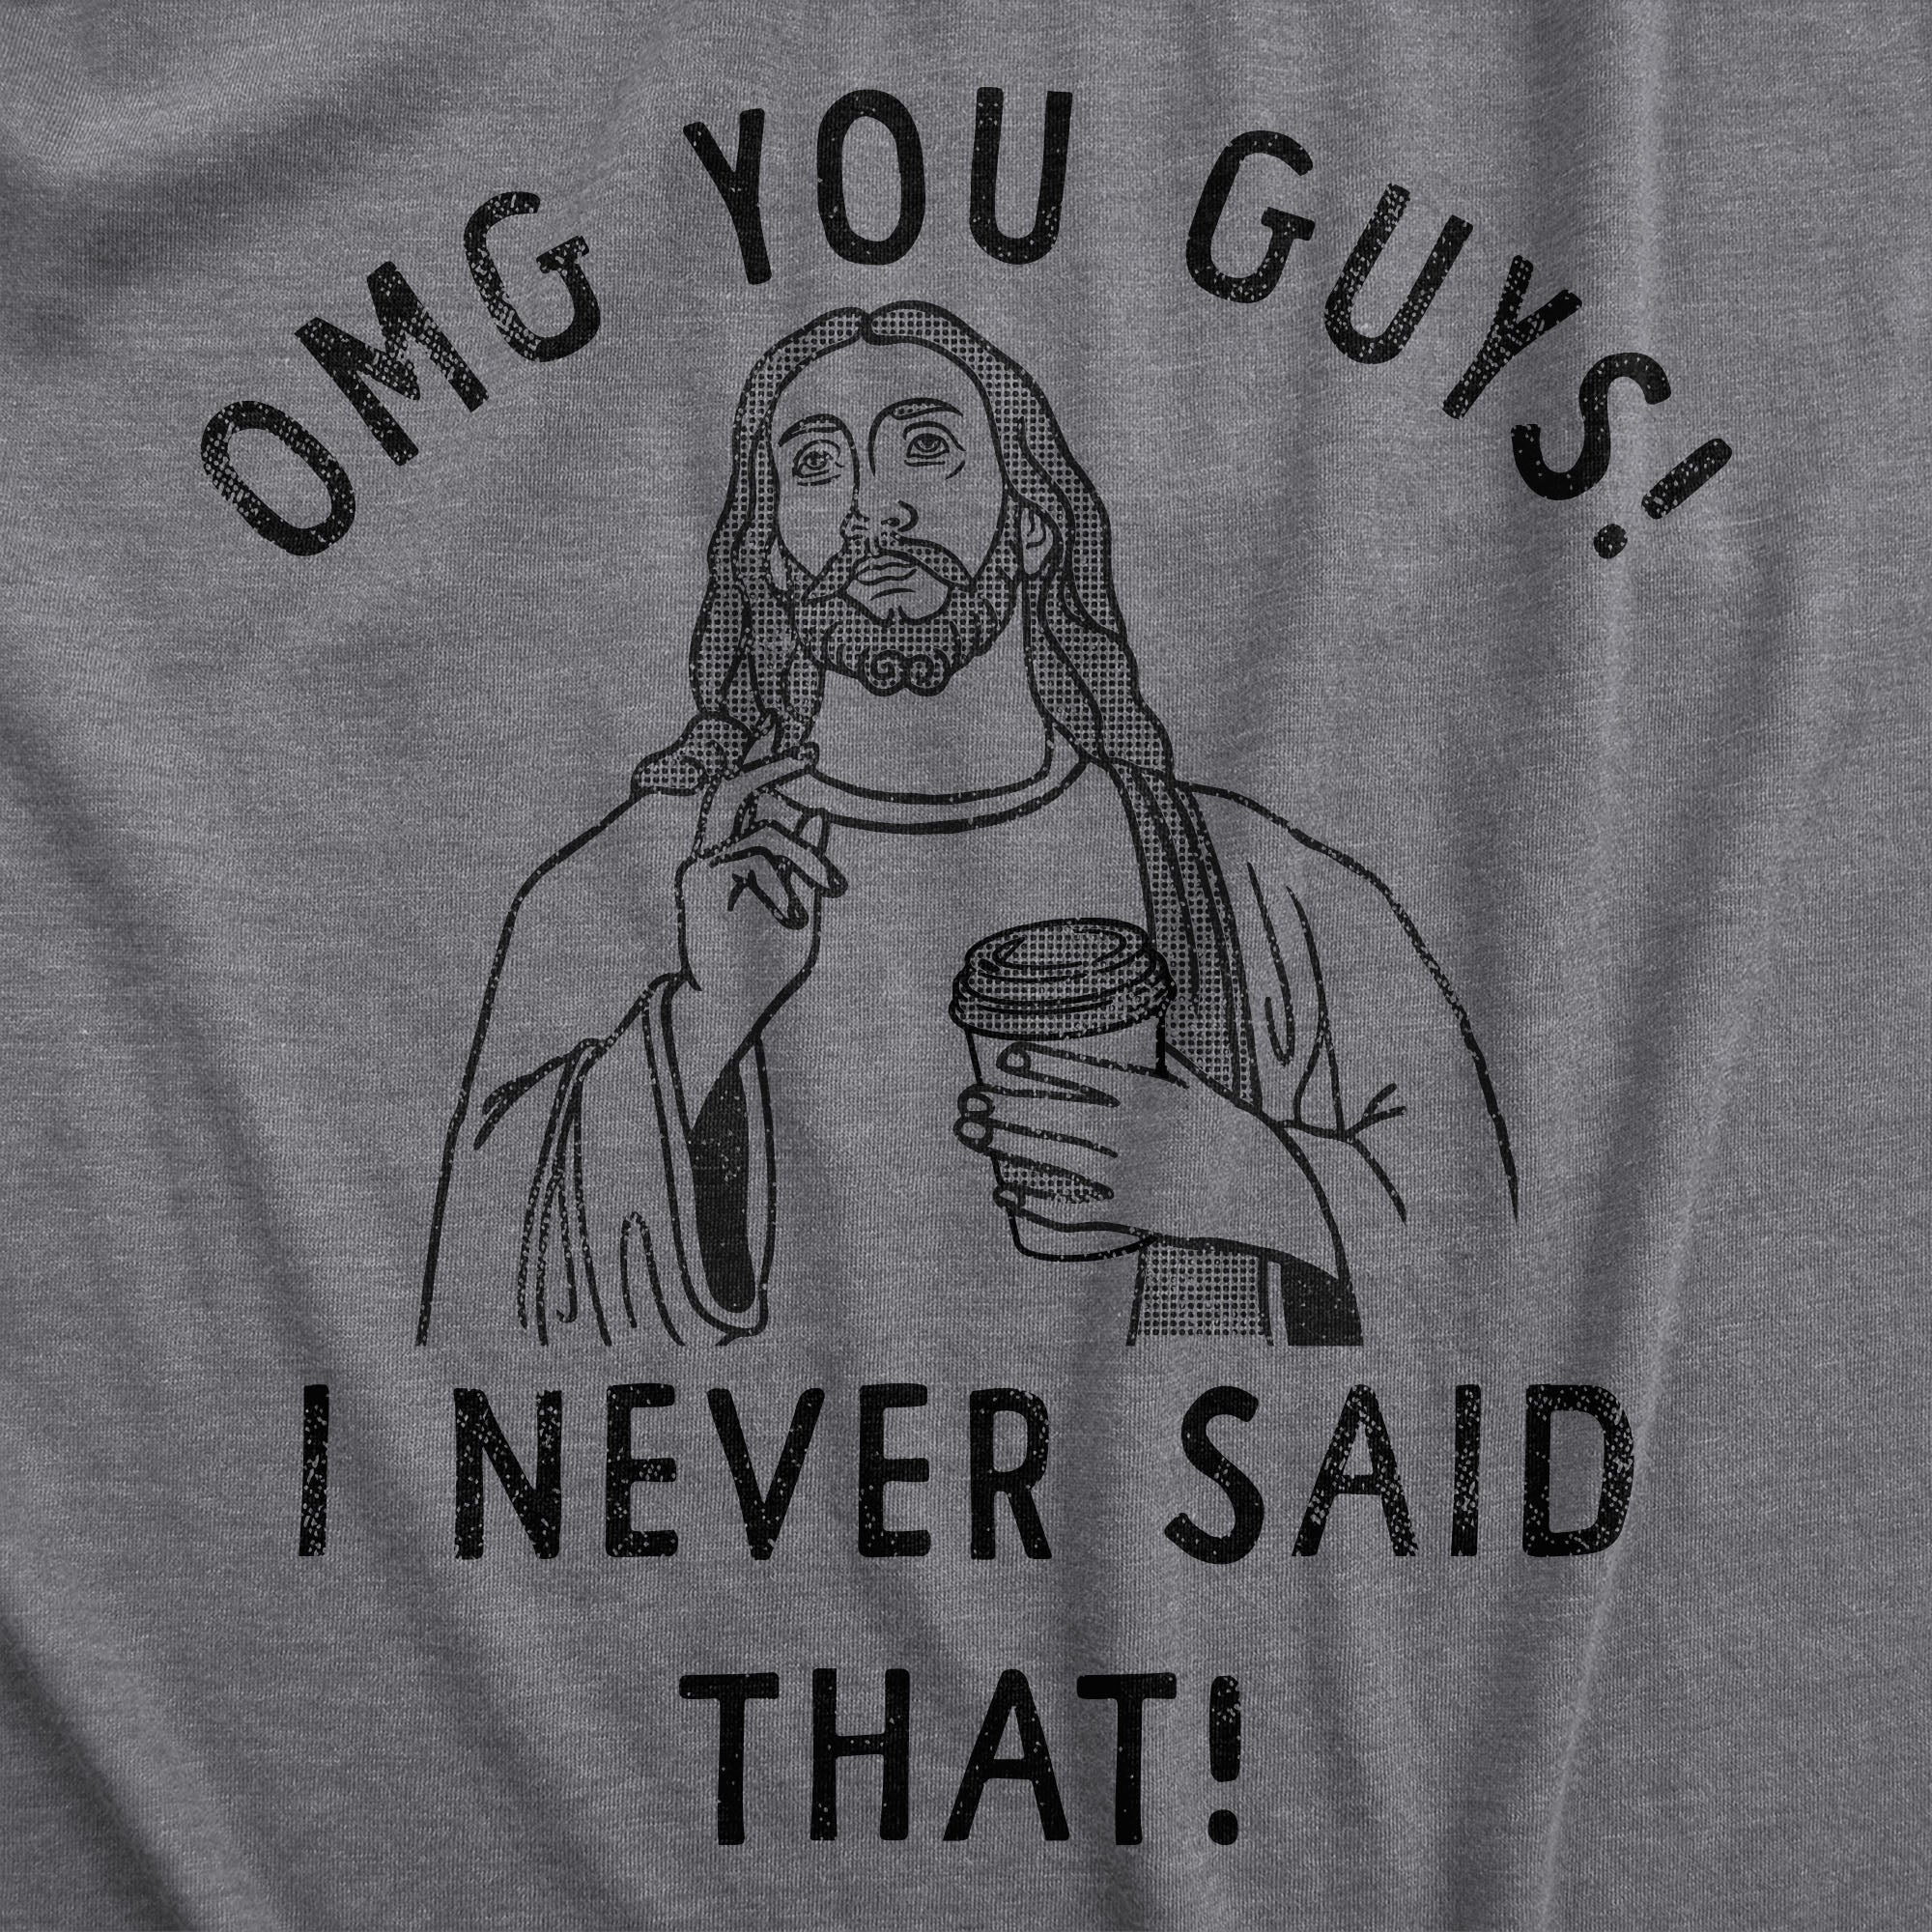 Funny Dark Heather Grey - OMG OMG You Guys I Never Said That Womens T Shirt Nerdy Sarcastic Religion Tee